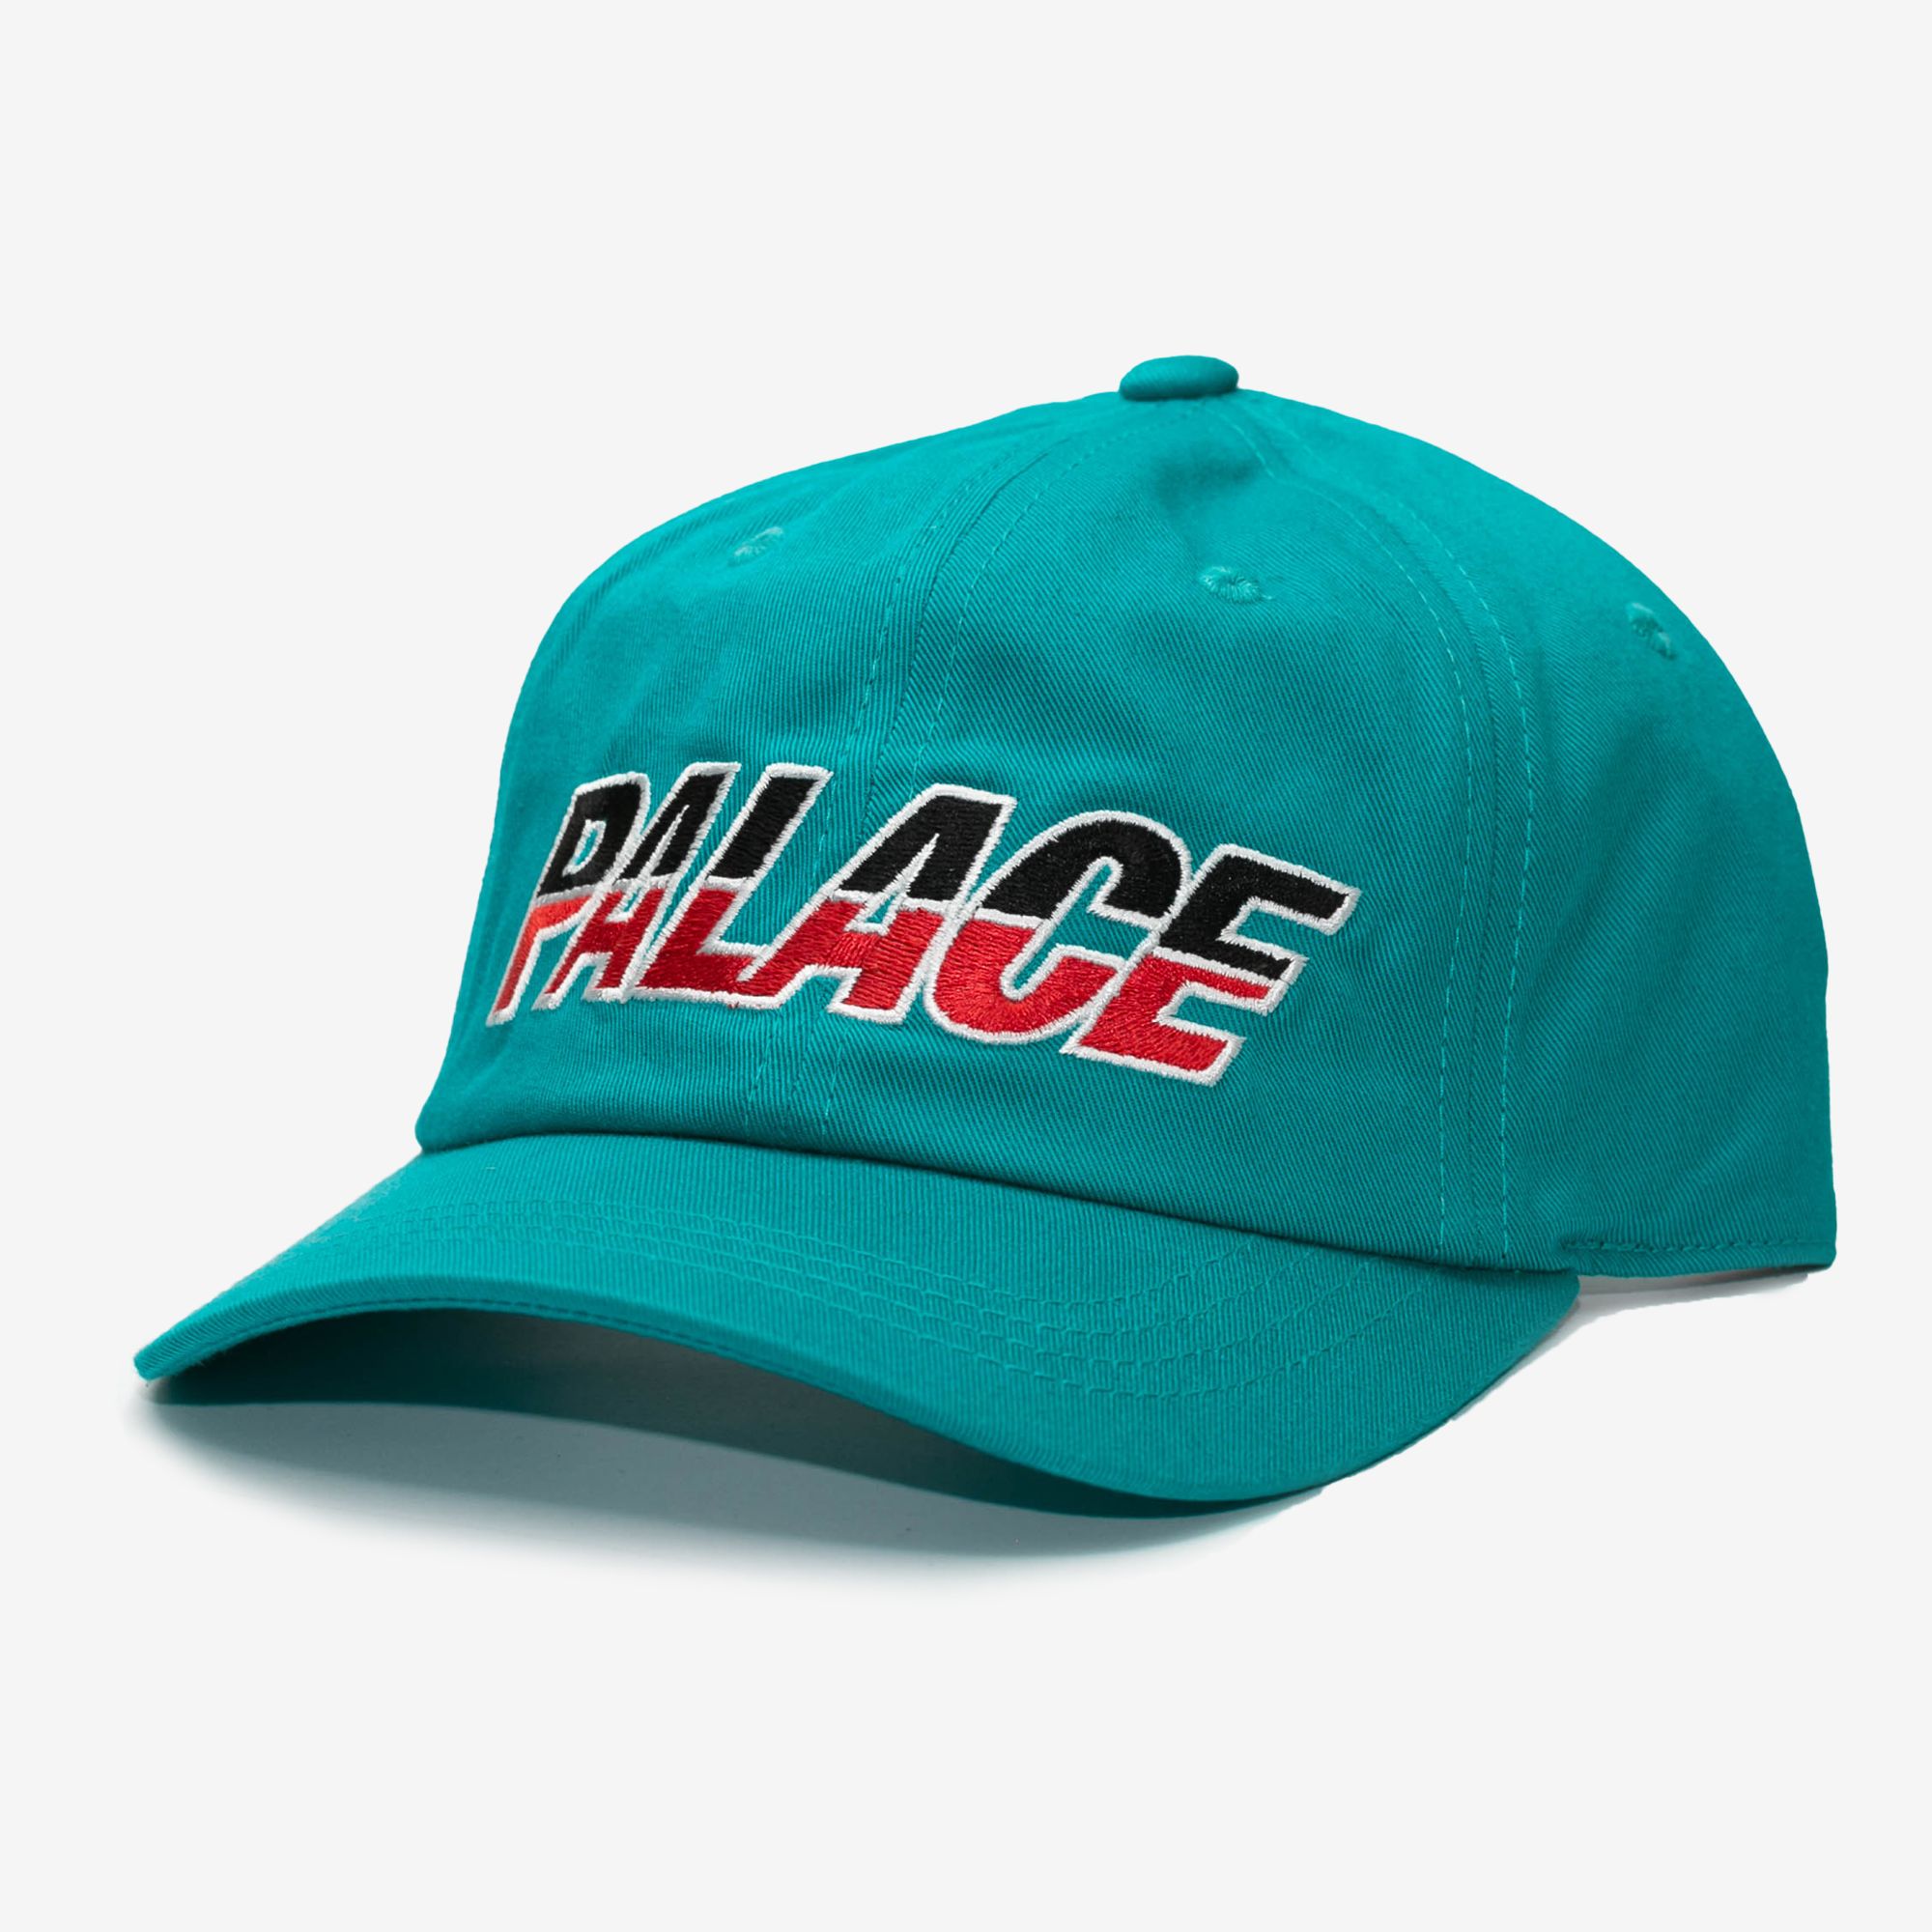  Palace Split Logo Hat - Teal 